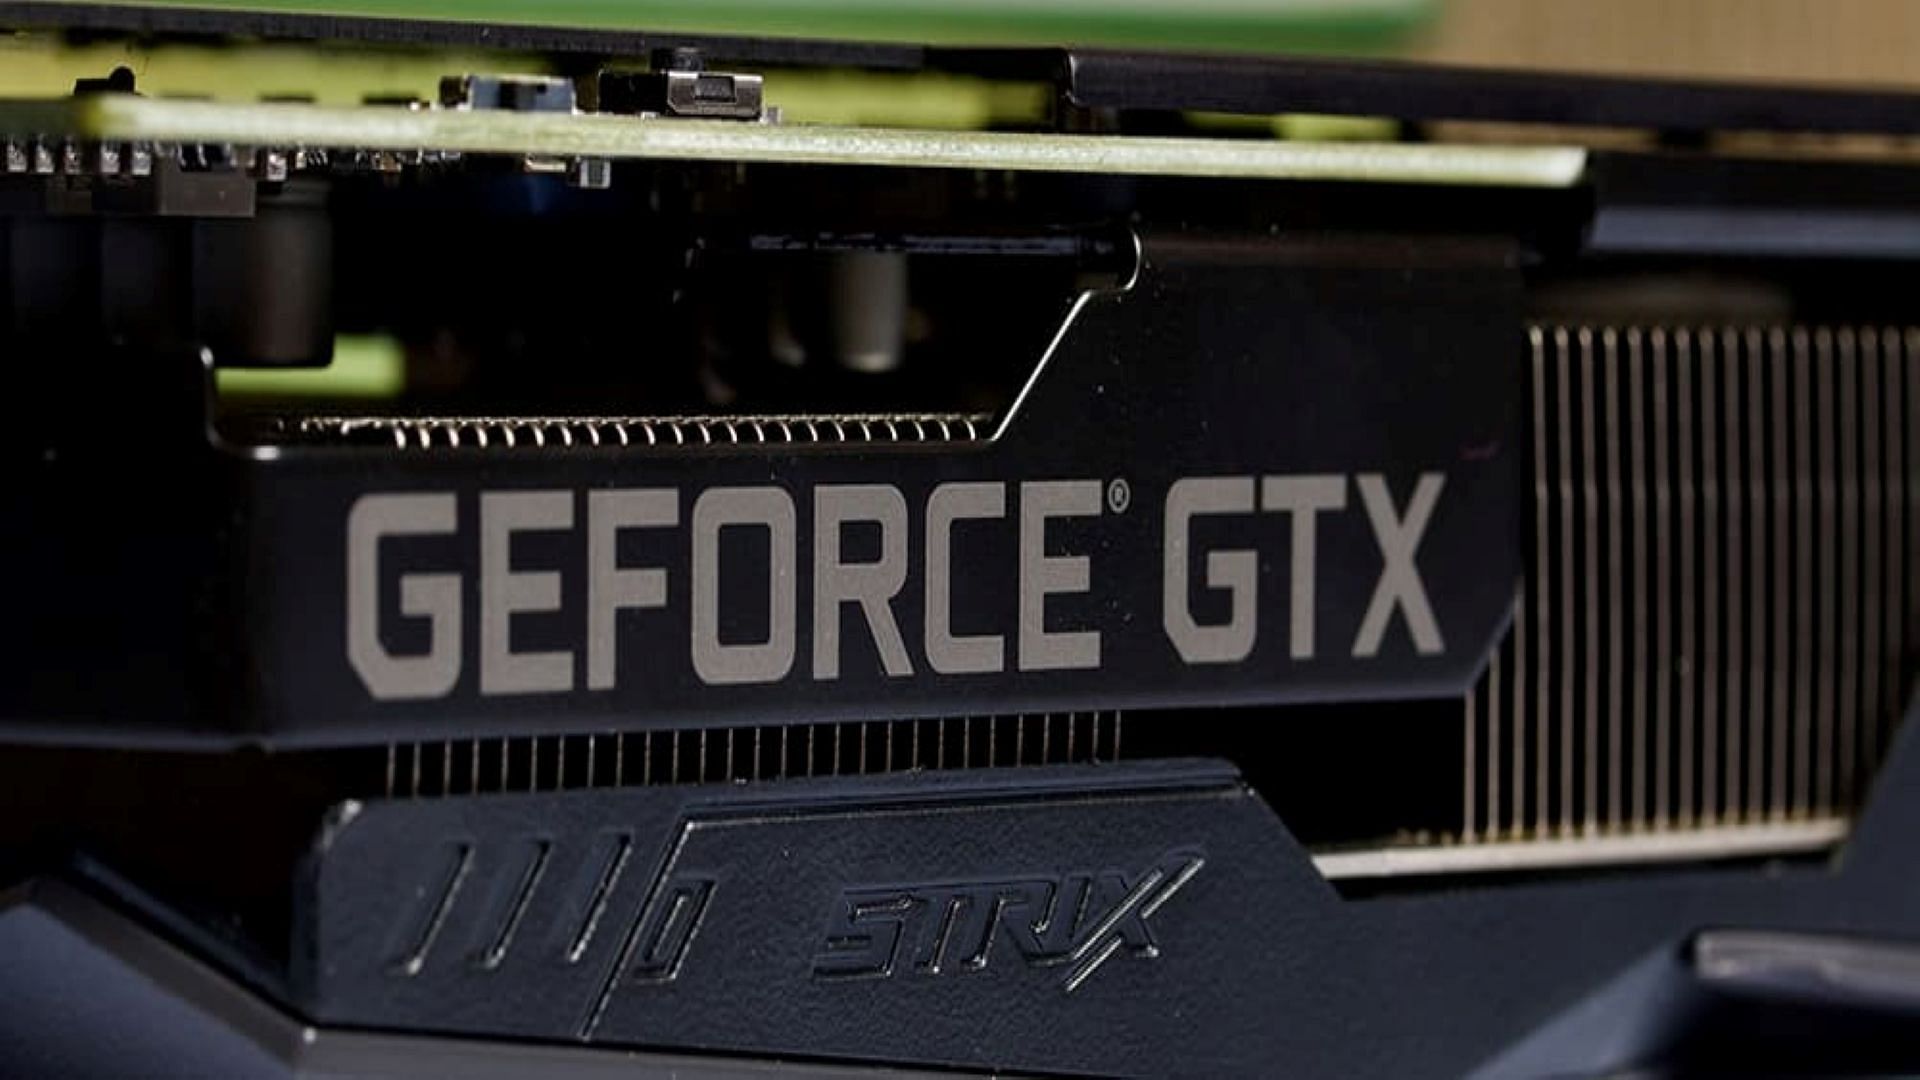 The Geforce GTX branding (Image via HP)